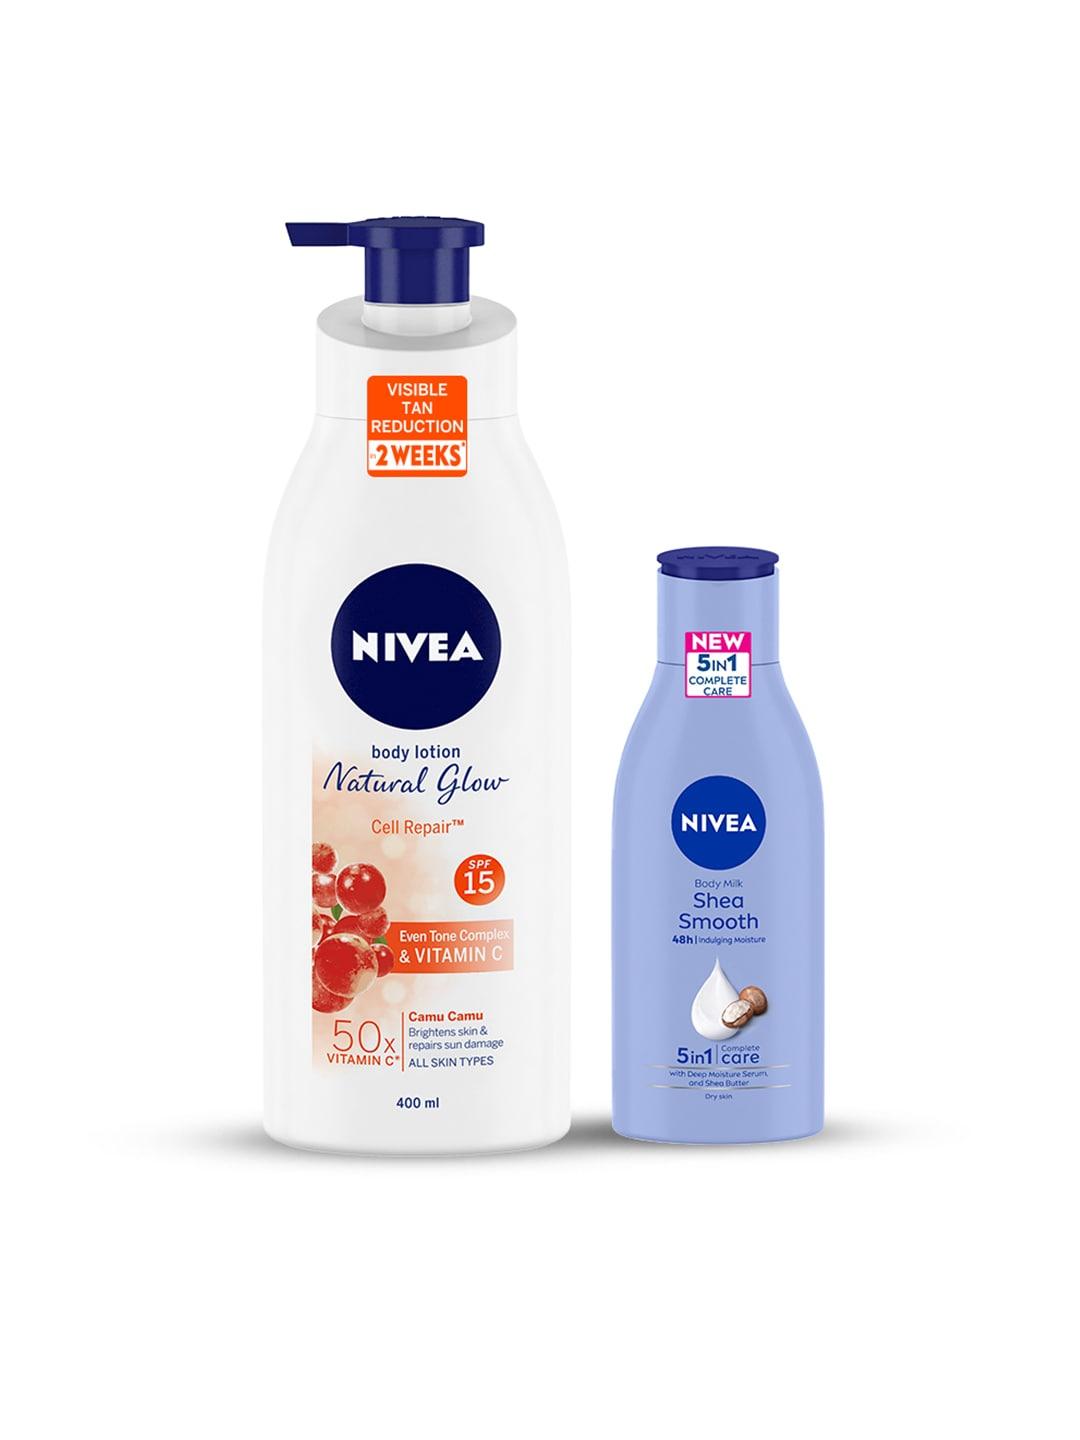 Nivea Set of Extra Whitening & Shea Smooth Milk Body Lotions